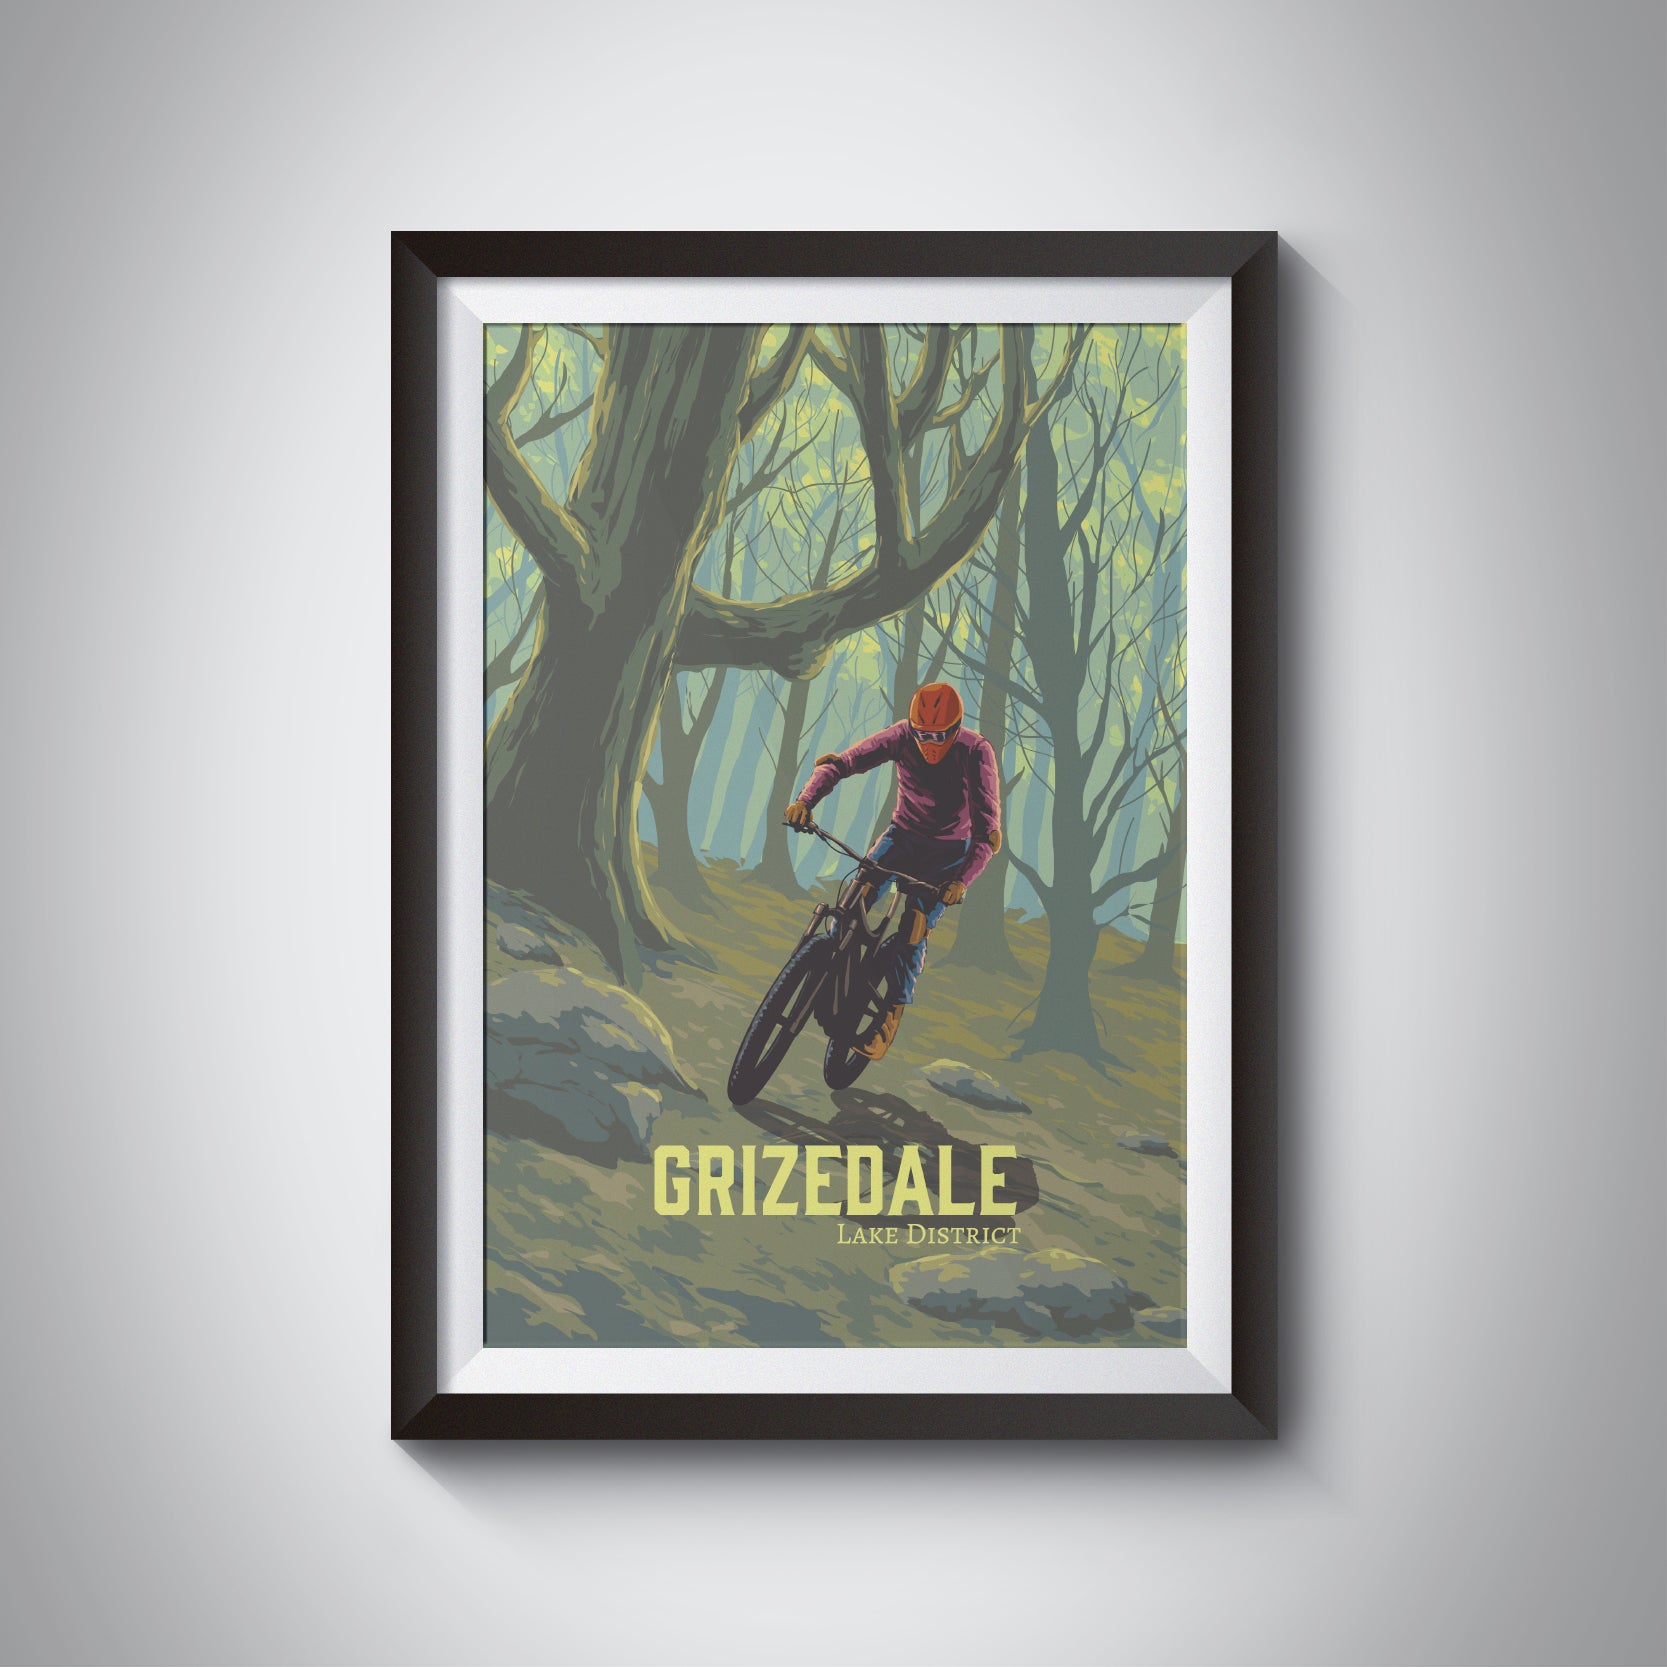 Grizedale Mountain Biking Travel Poster